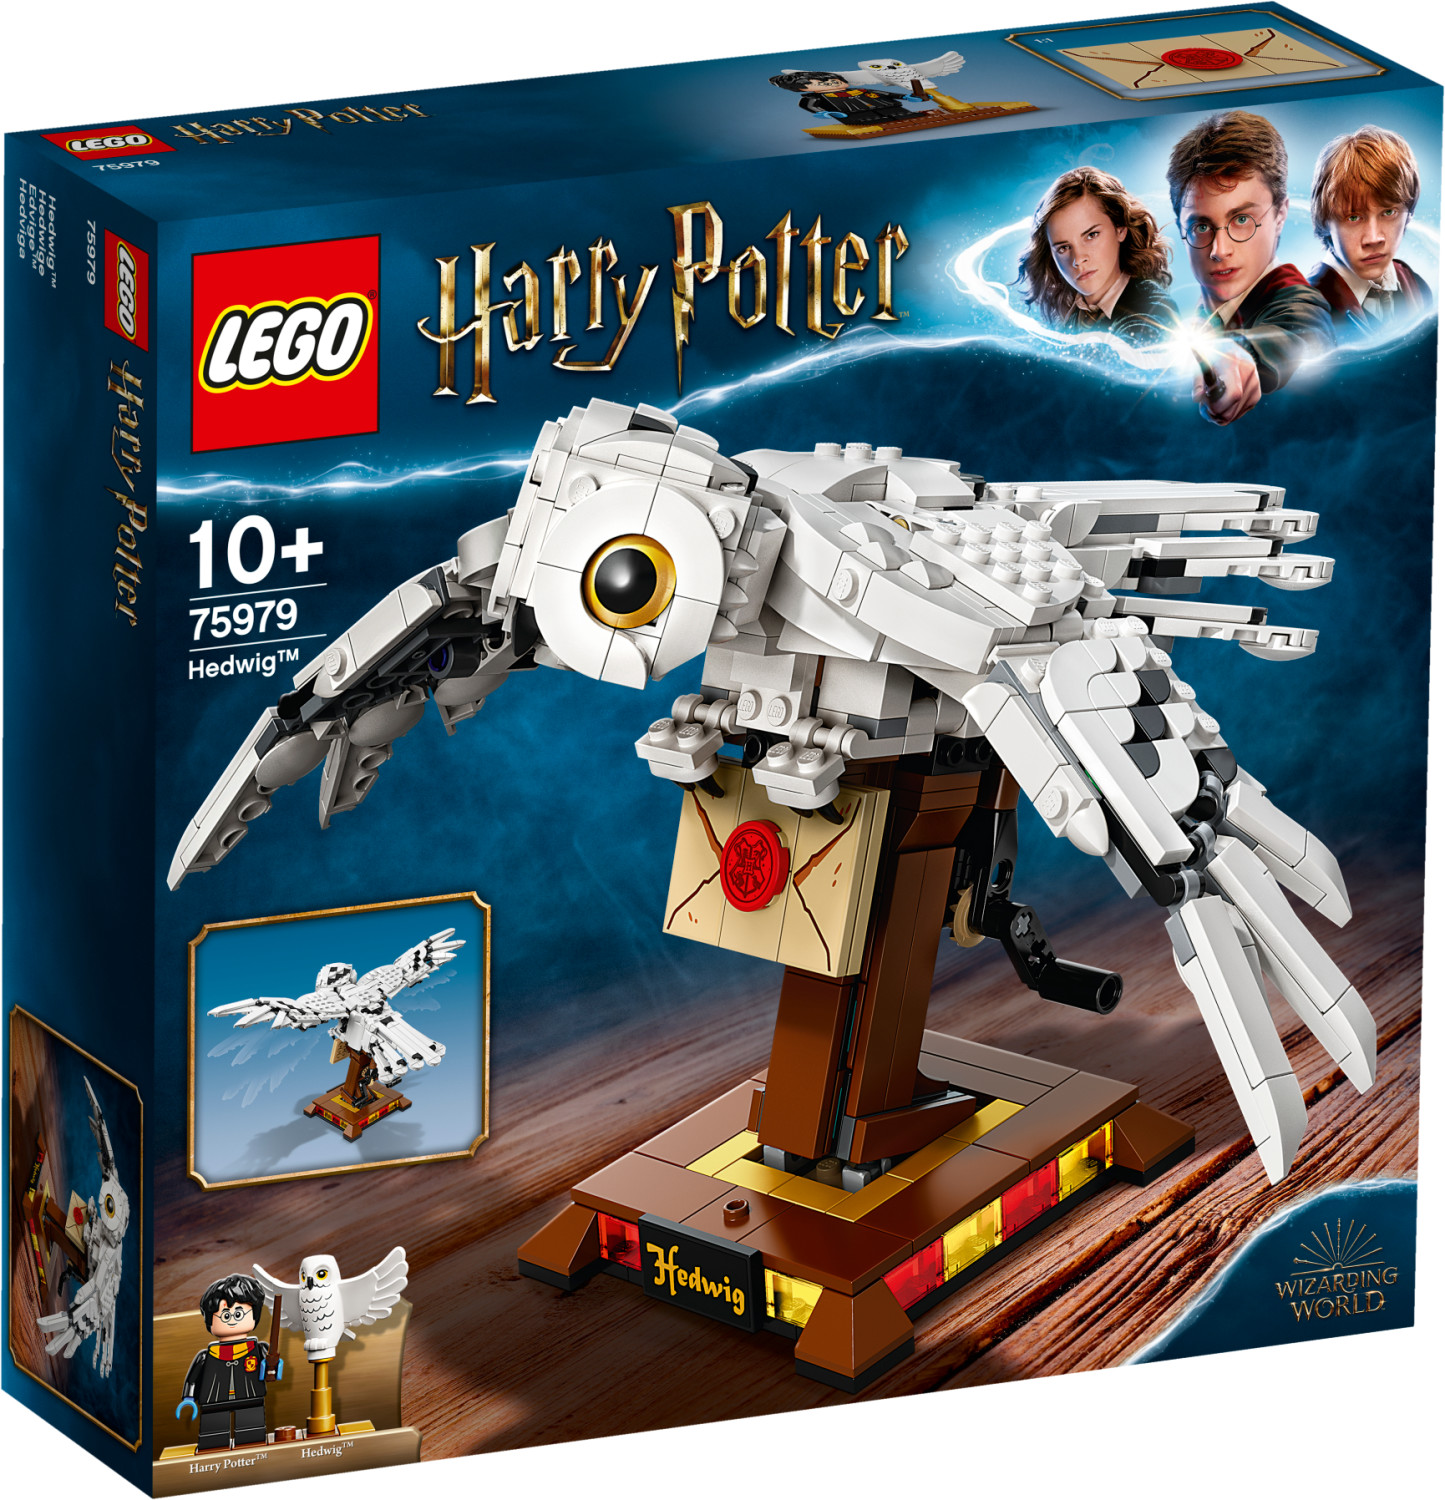 LEGO Harry Potter - Edvige (75979) a € 59,99 (oggi)